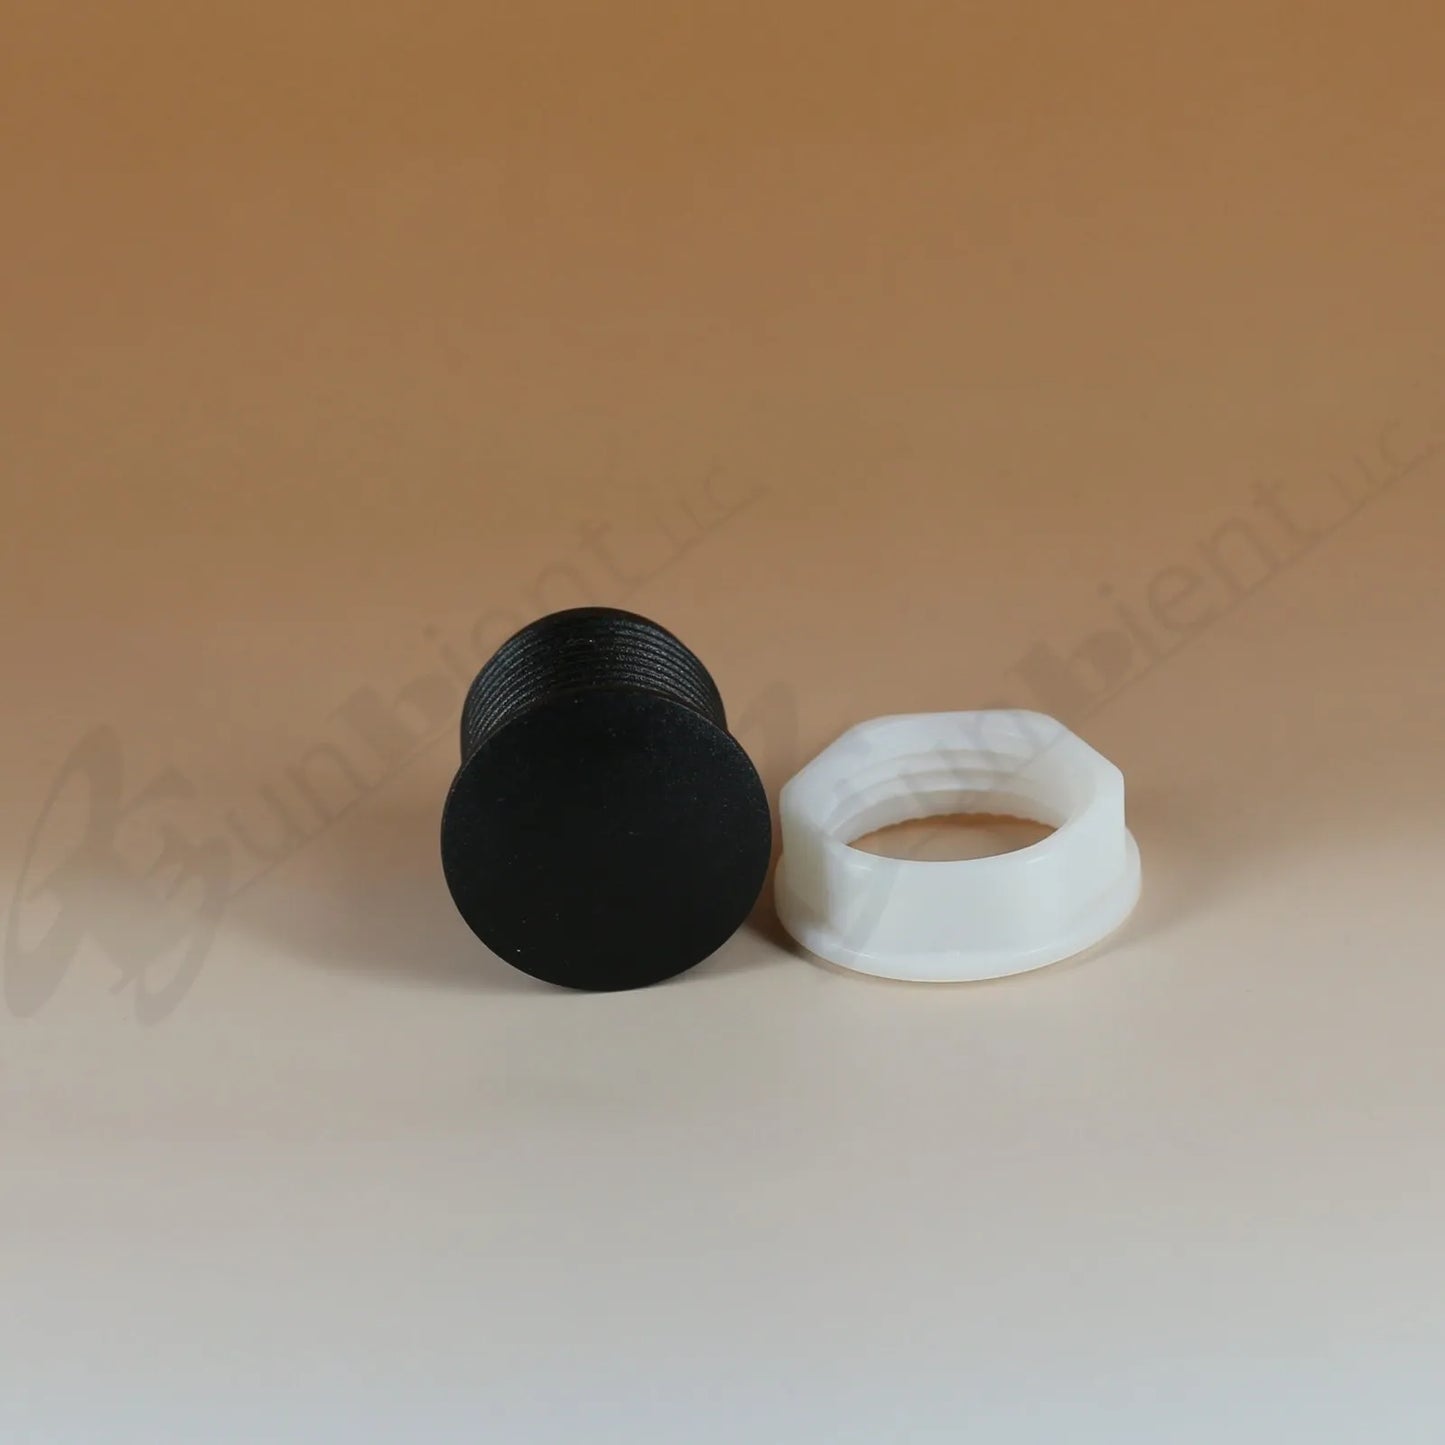 Sanwa Seimitsu Button Hole Cap Plug 24mm for Jamma Candy Cabinet OBSM screw type